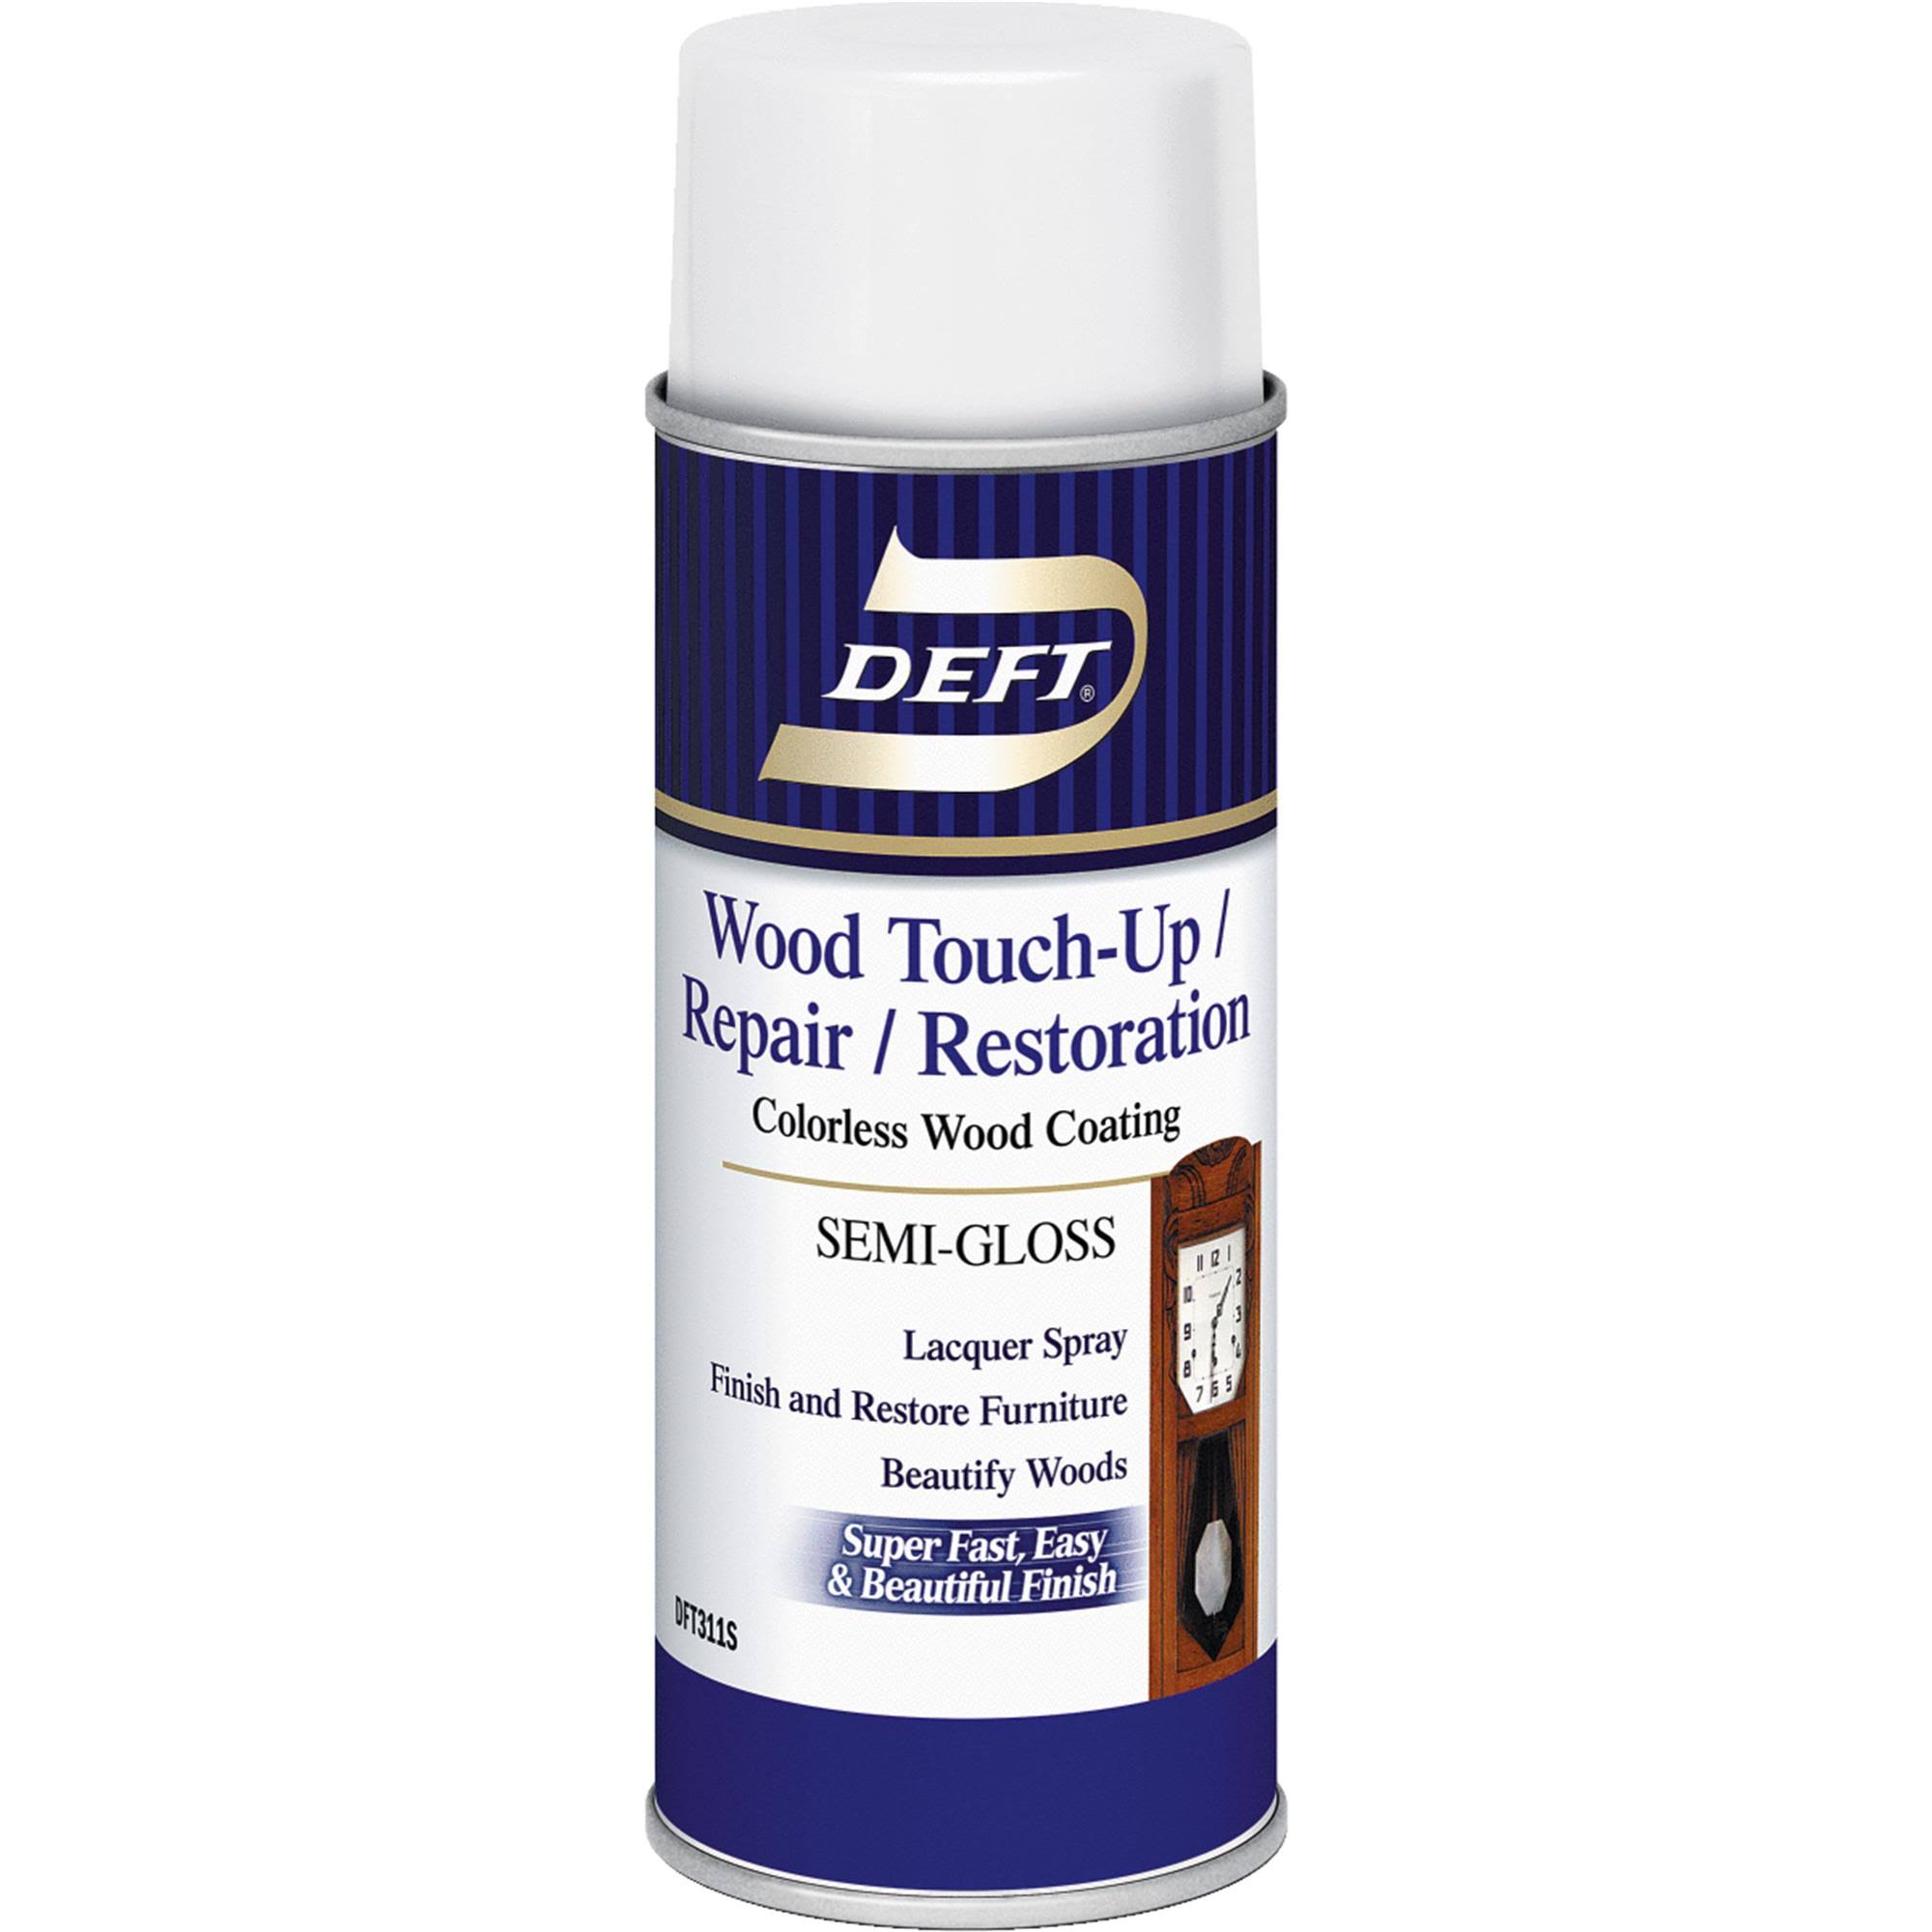 Deft VOC Compliant Wood Finish Interior Spray Lacquer - Clear, 12oz